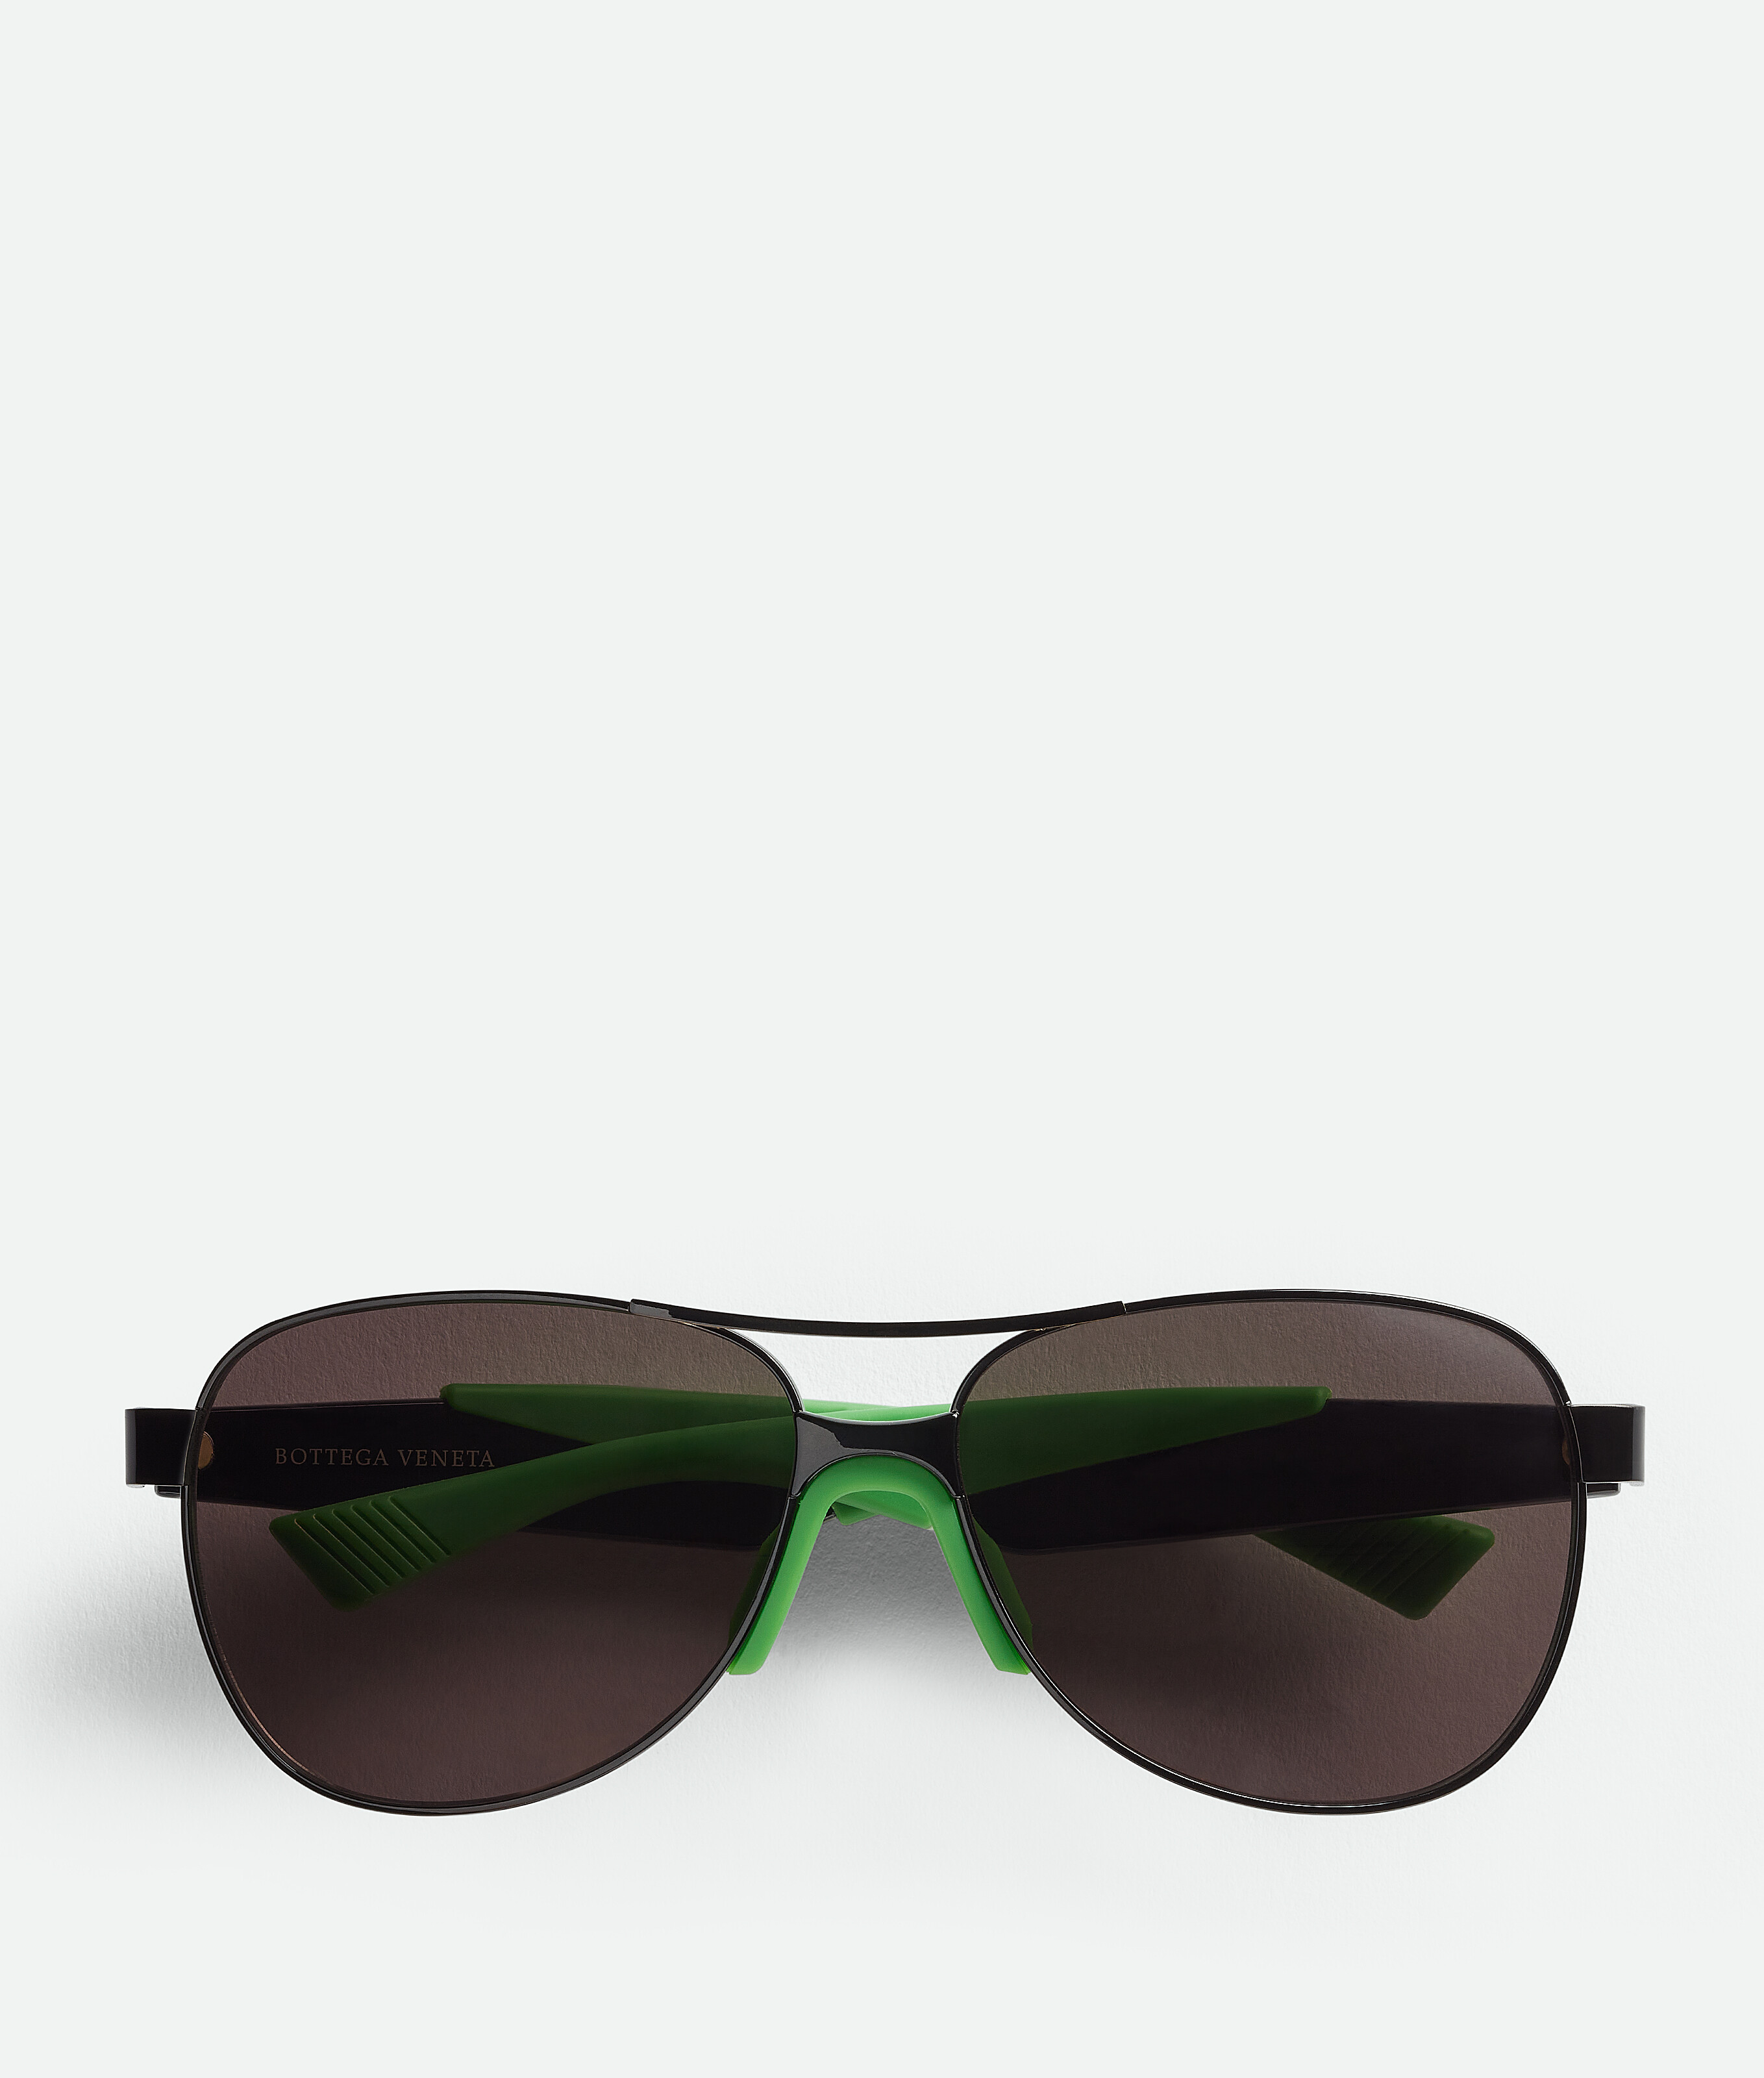 Metallic Aviator metal sunglasses, Bottega Veneta